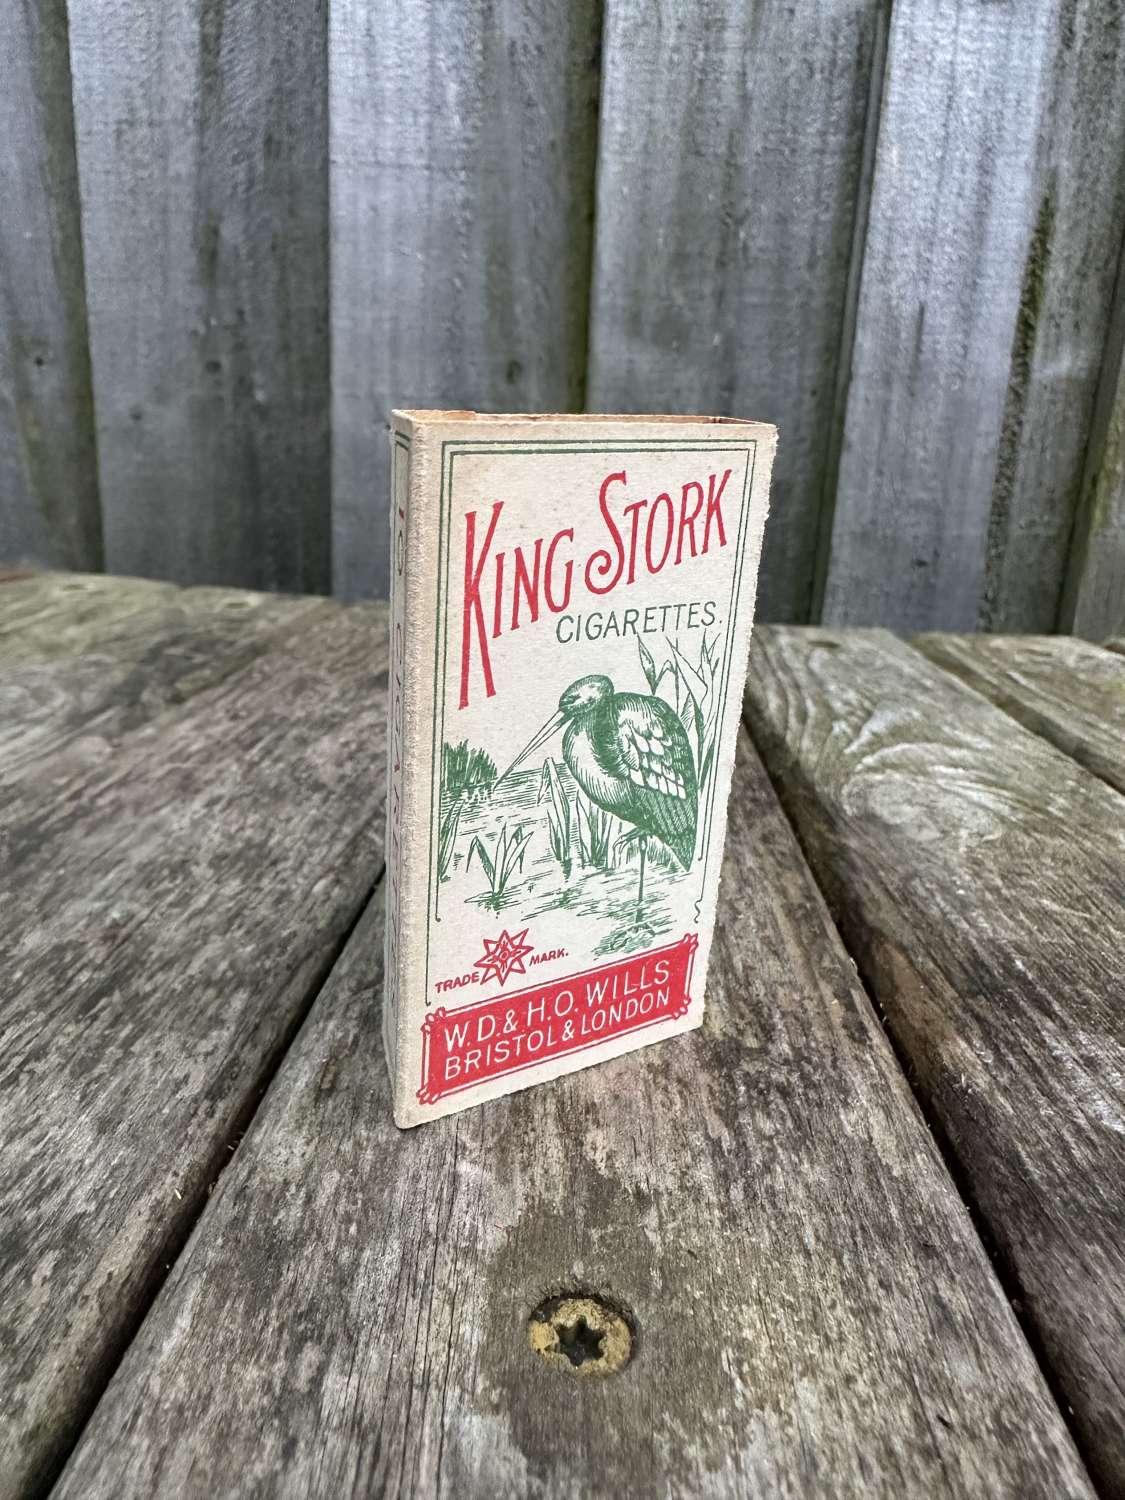 Scarce king stork cigarette 10 pack by wills